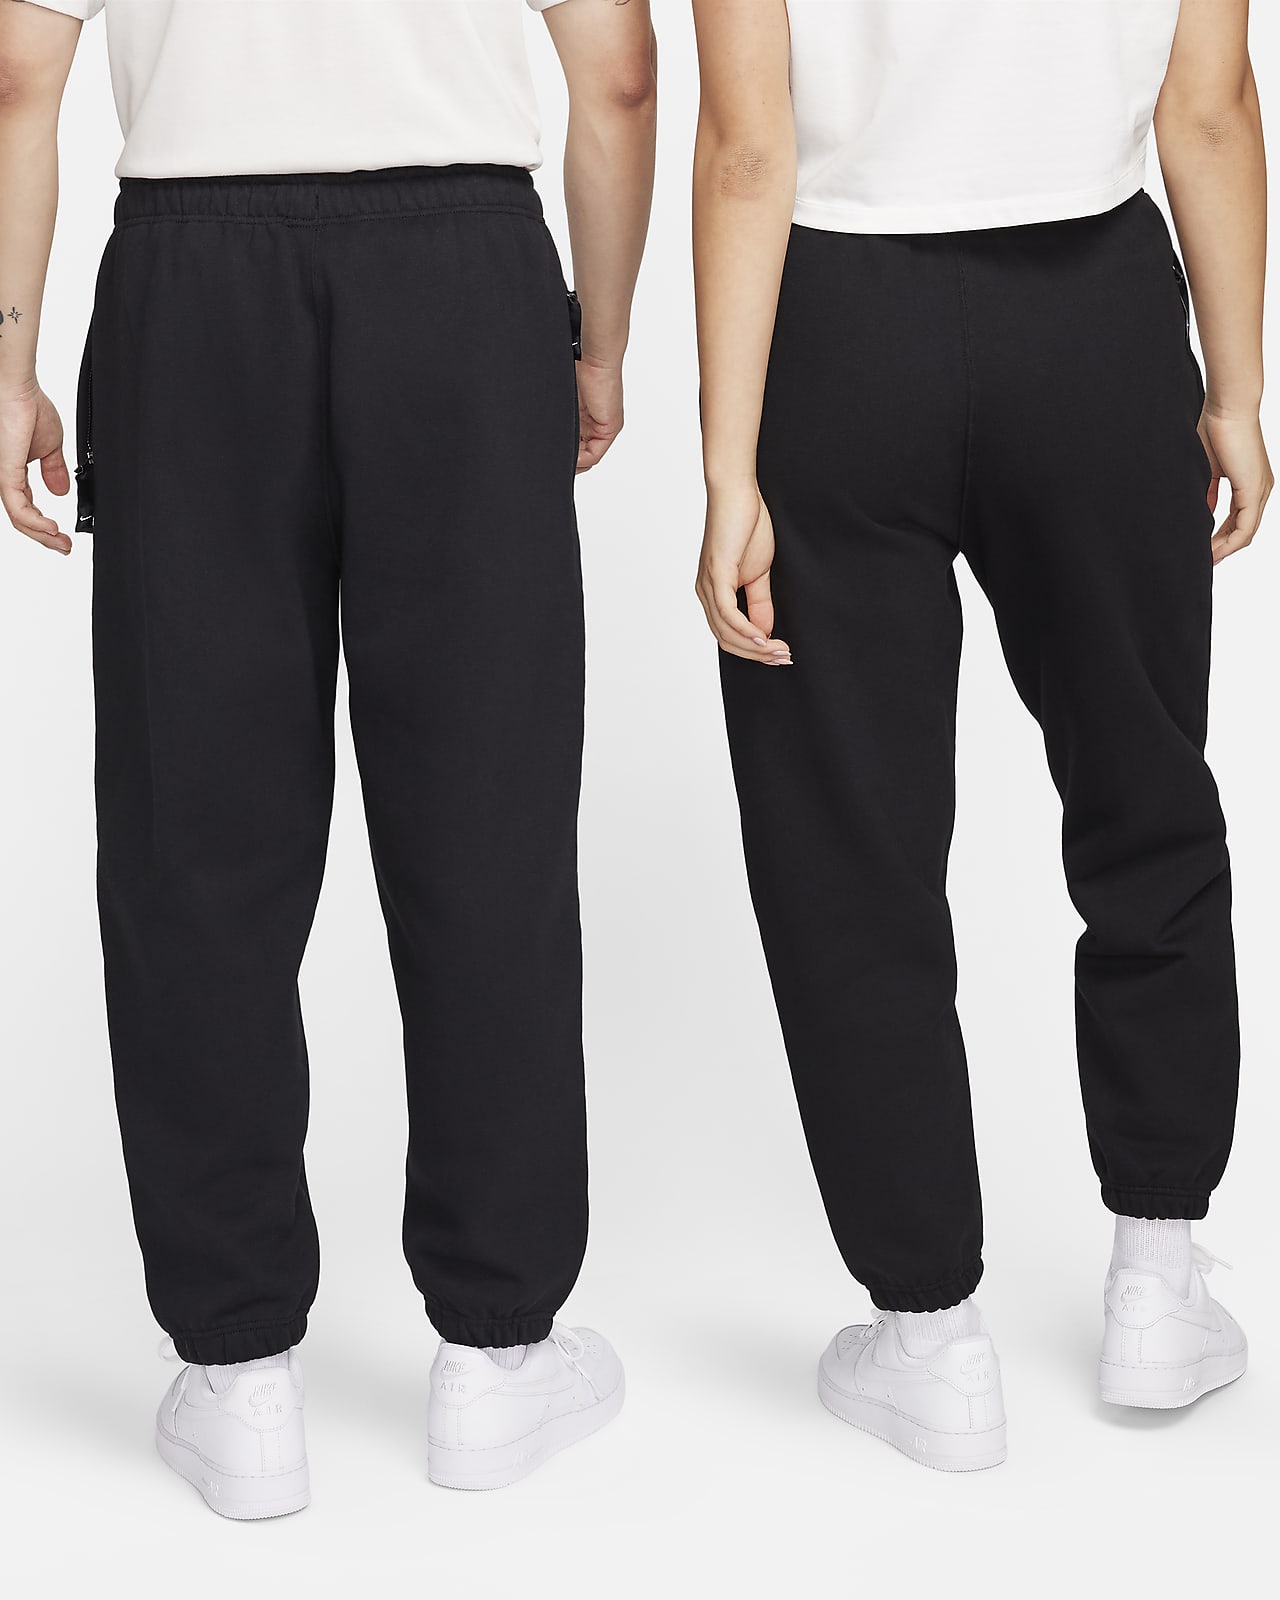 Dri-Fit Trouser for Men`s, Summer / Sports trouser, Branded & Export Quality